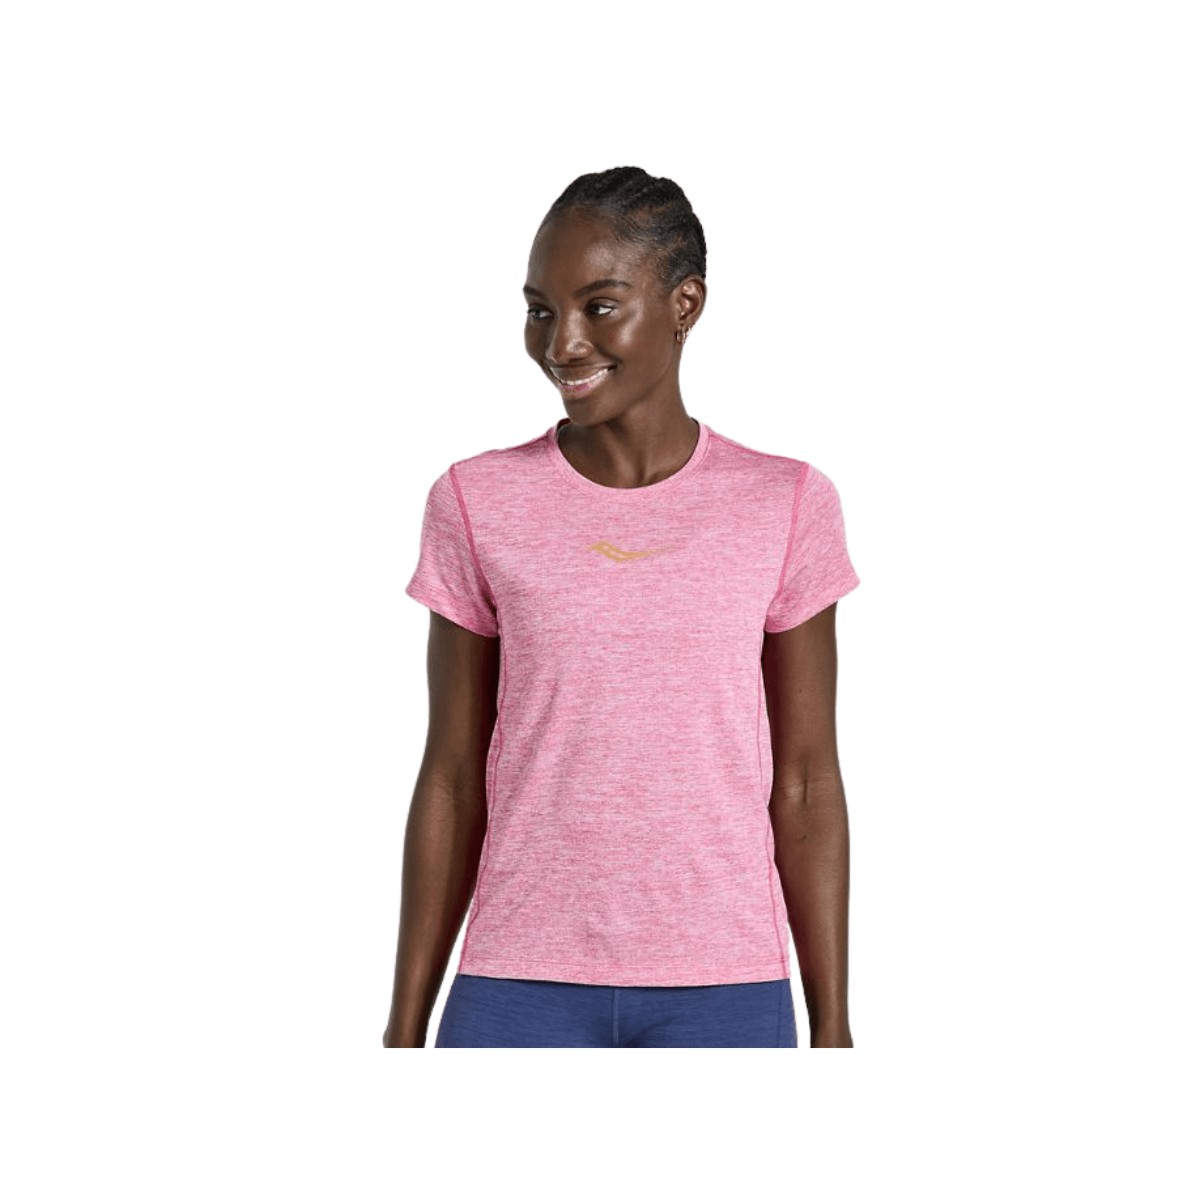 Saucony Women's Stopwatch Pink T-Shirt, Size S